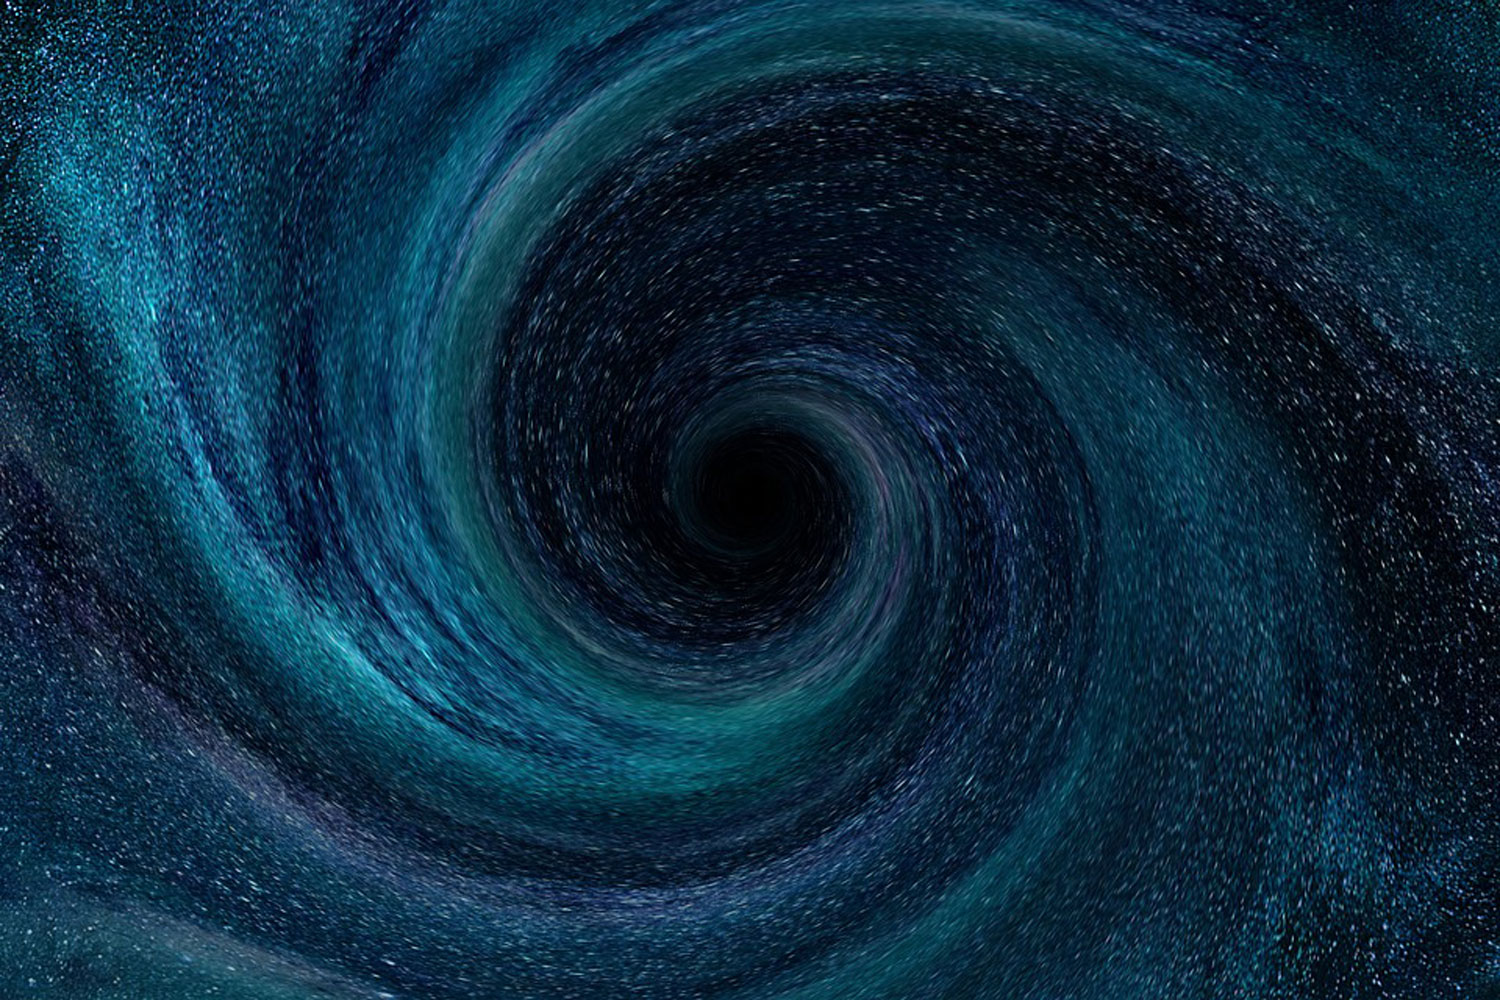 Image showing a black hole